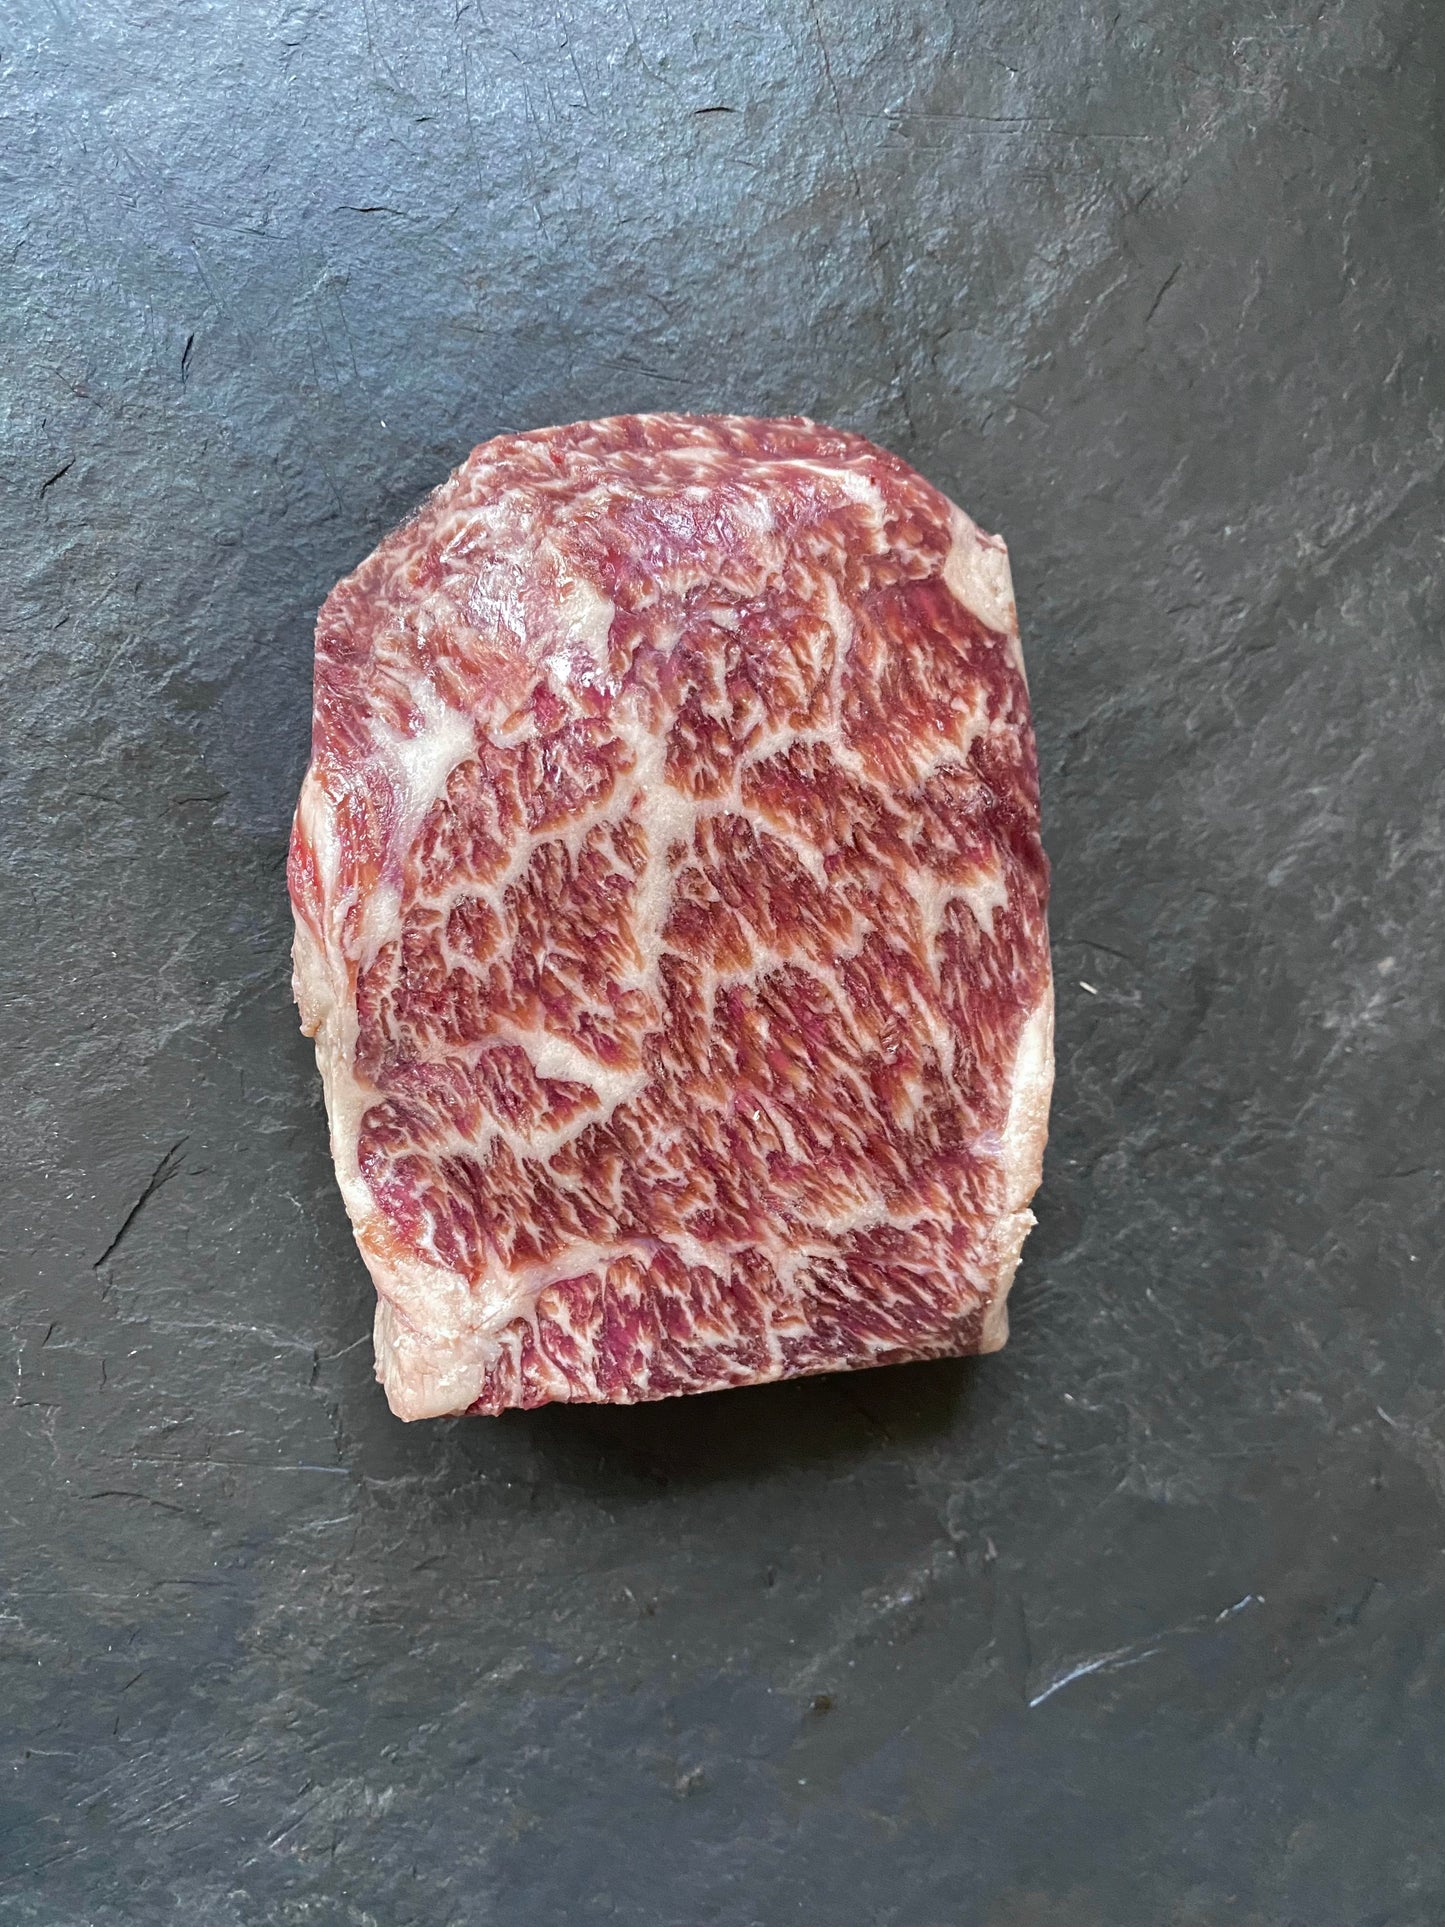 Farm to Friends Package (Ribeye Steak) -American Wagyu